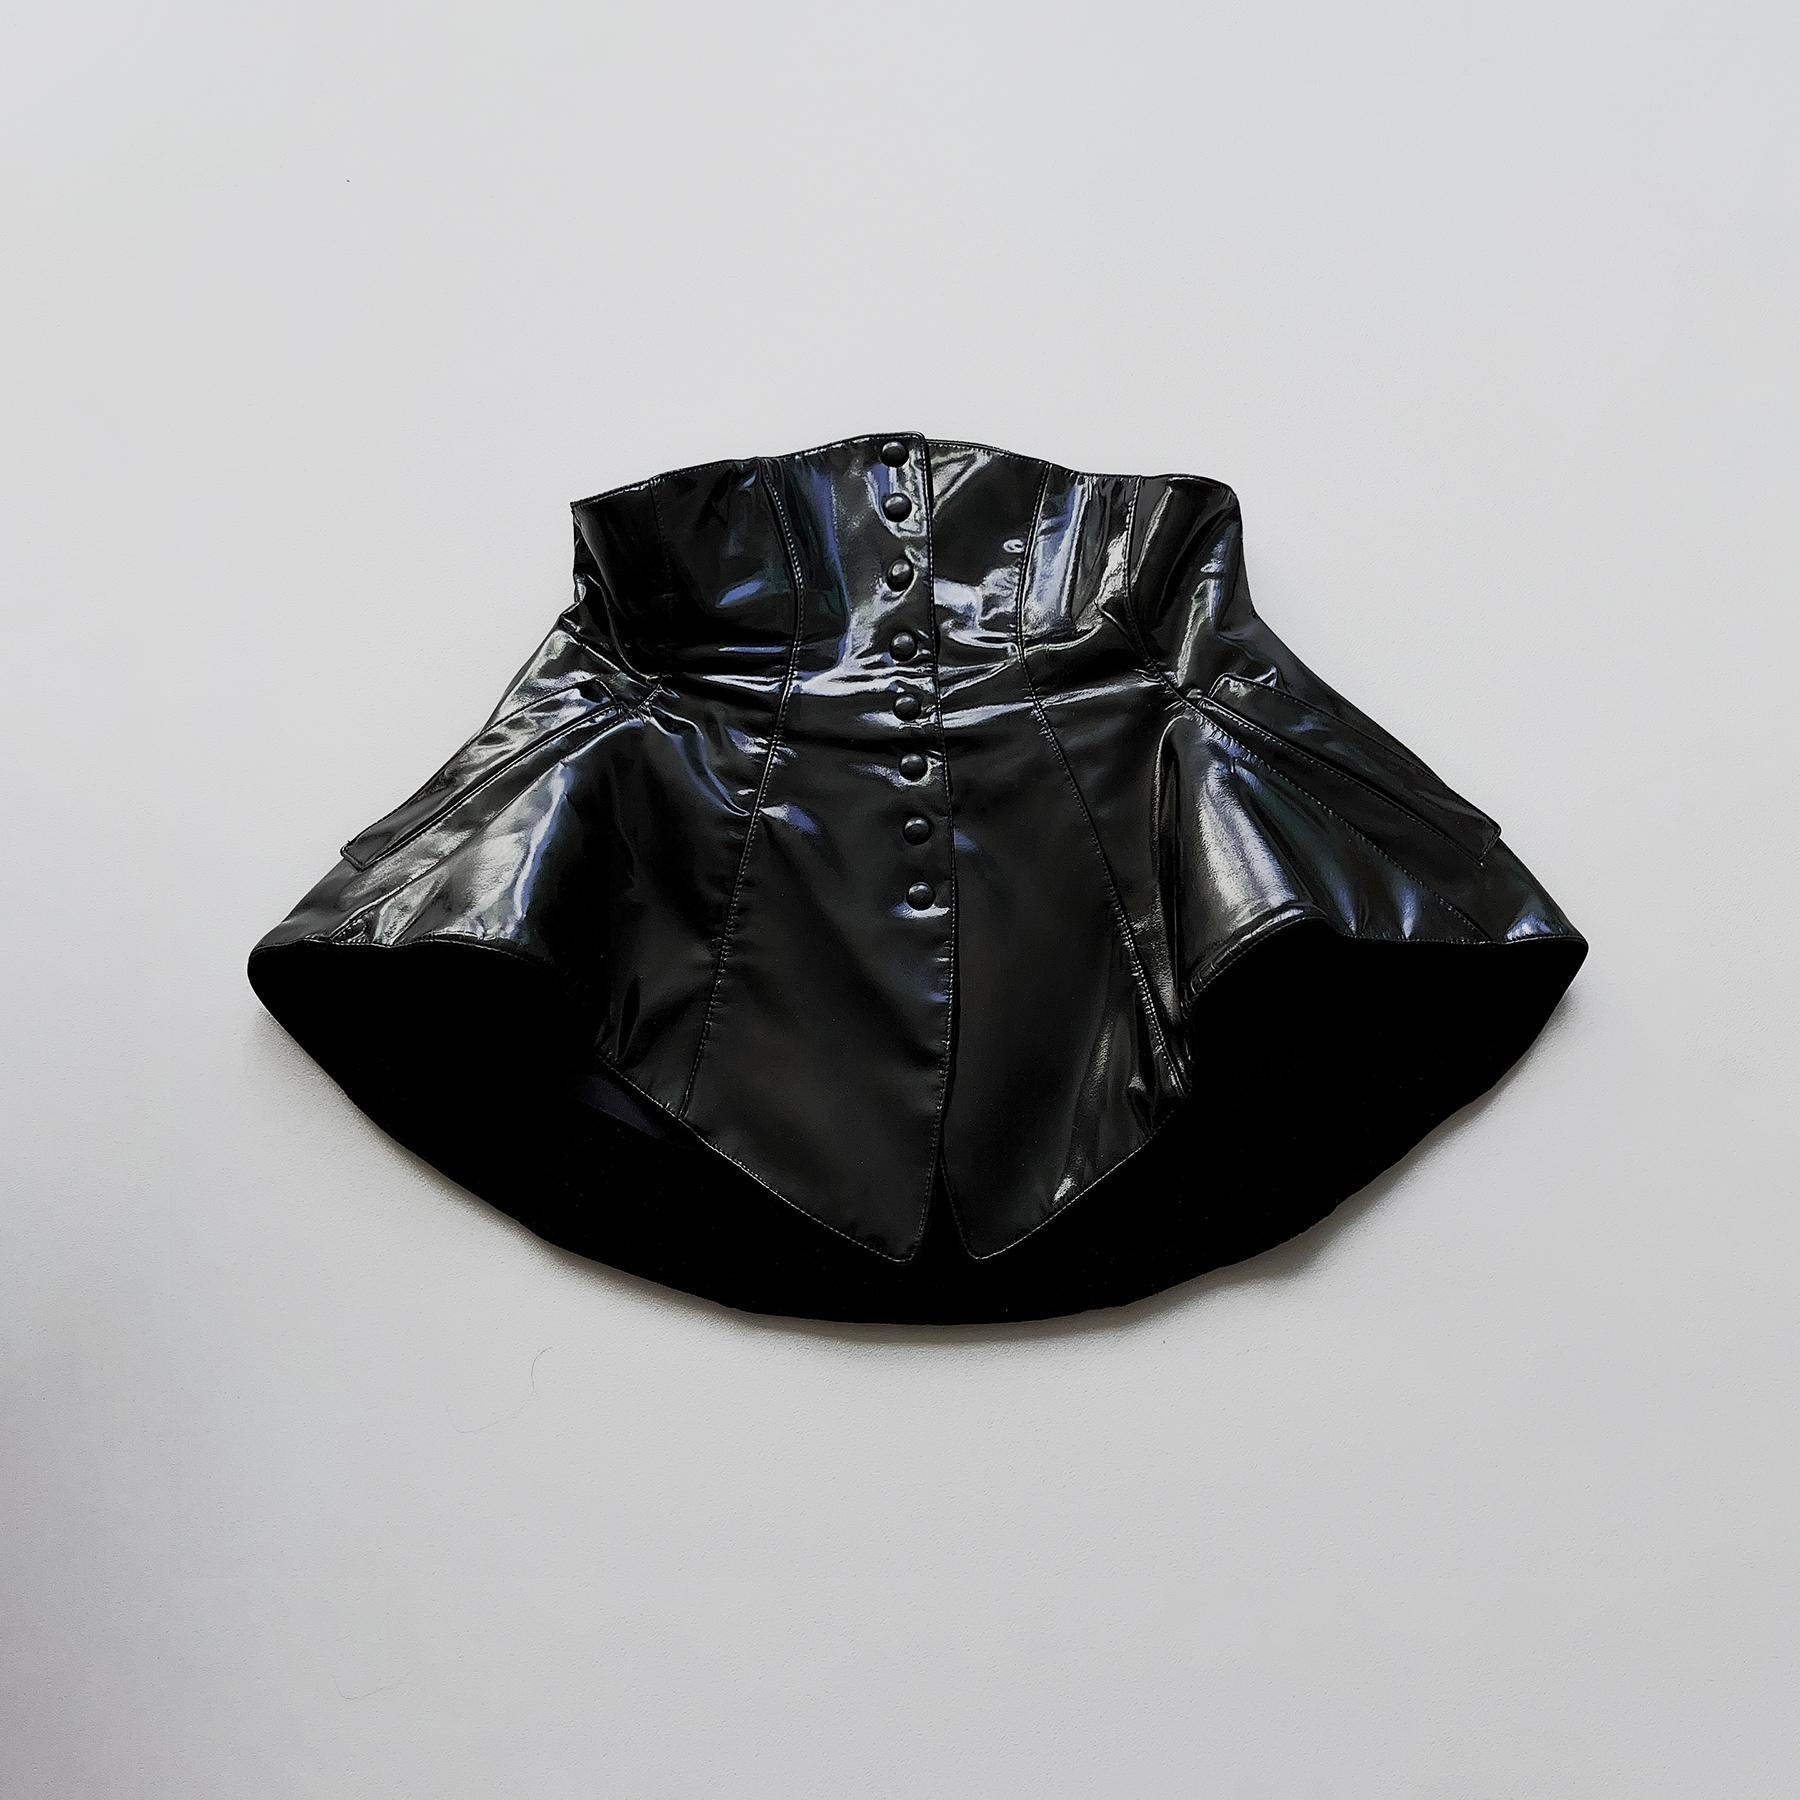 Thierry Mugler Black Vinyl Corset FW 1995 Sculptural Dramatic 1